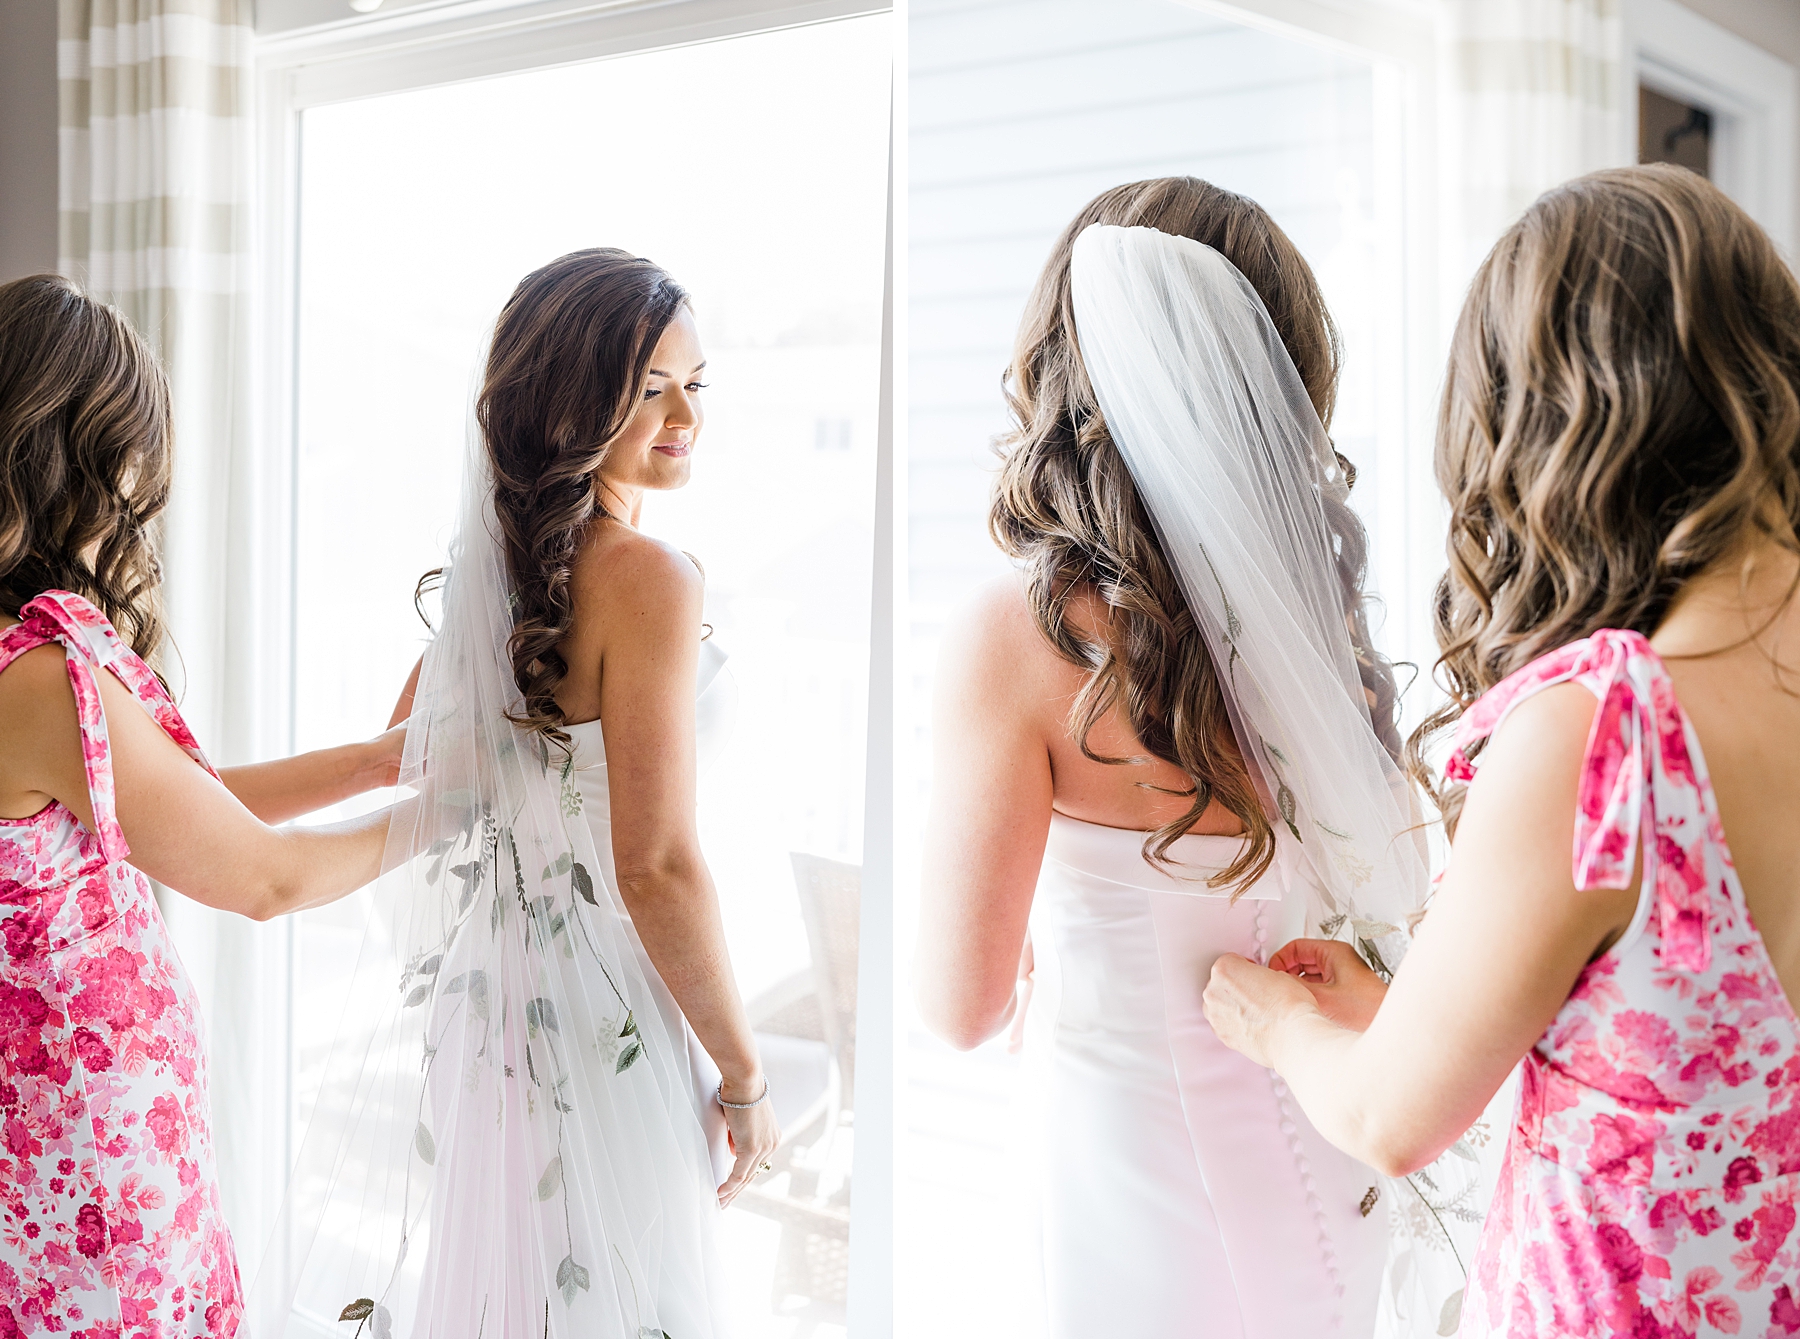 MOH helps bride into dress